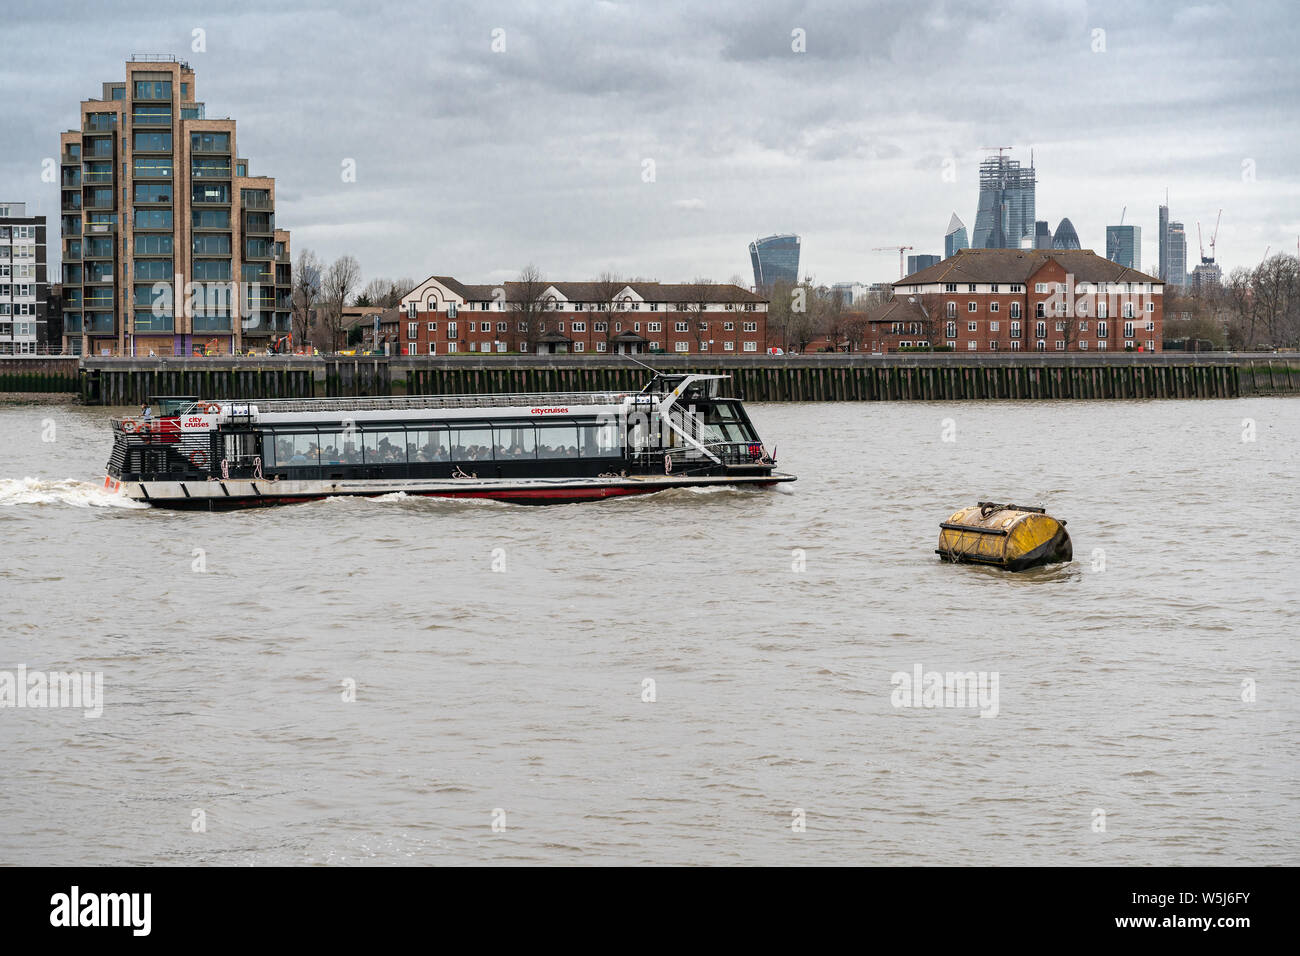 London, UK - March 05, 2019: Tourist boat on River Thames London England Uk Stock Photo